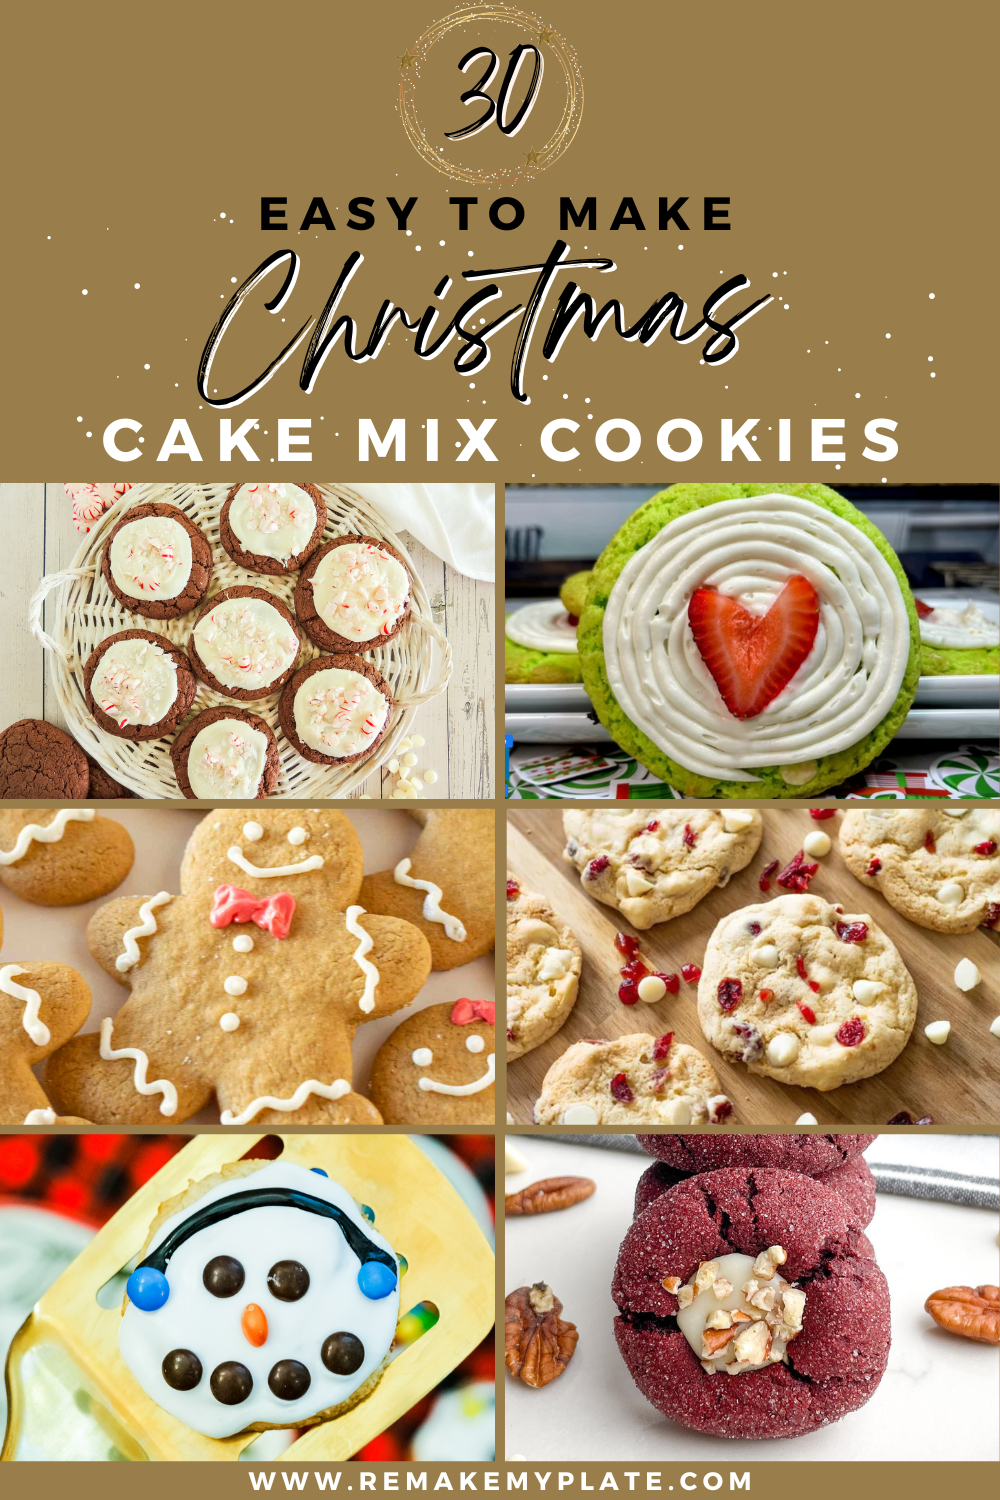 30 Cake Mix Cookies Pinterest